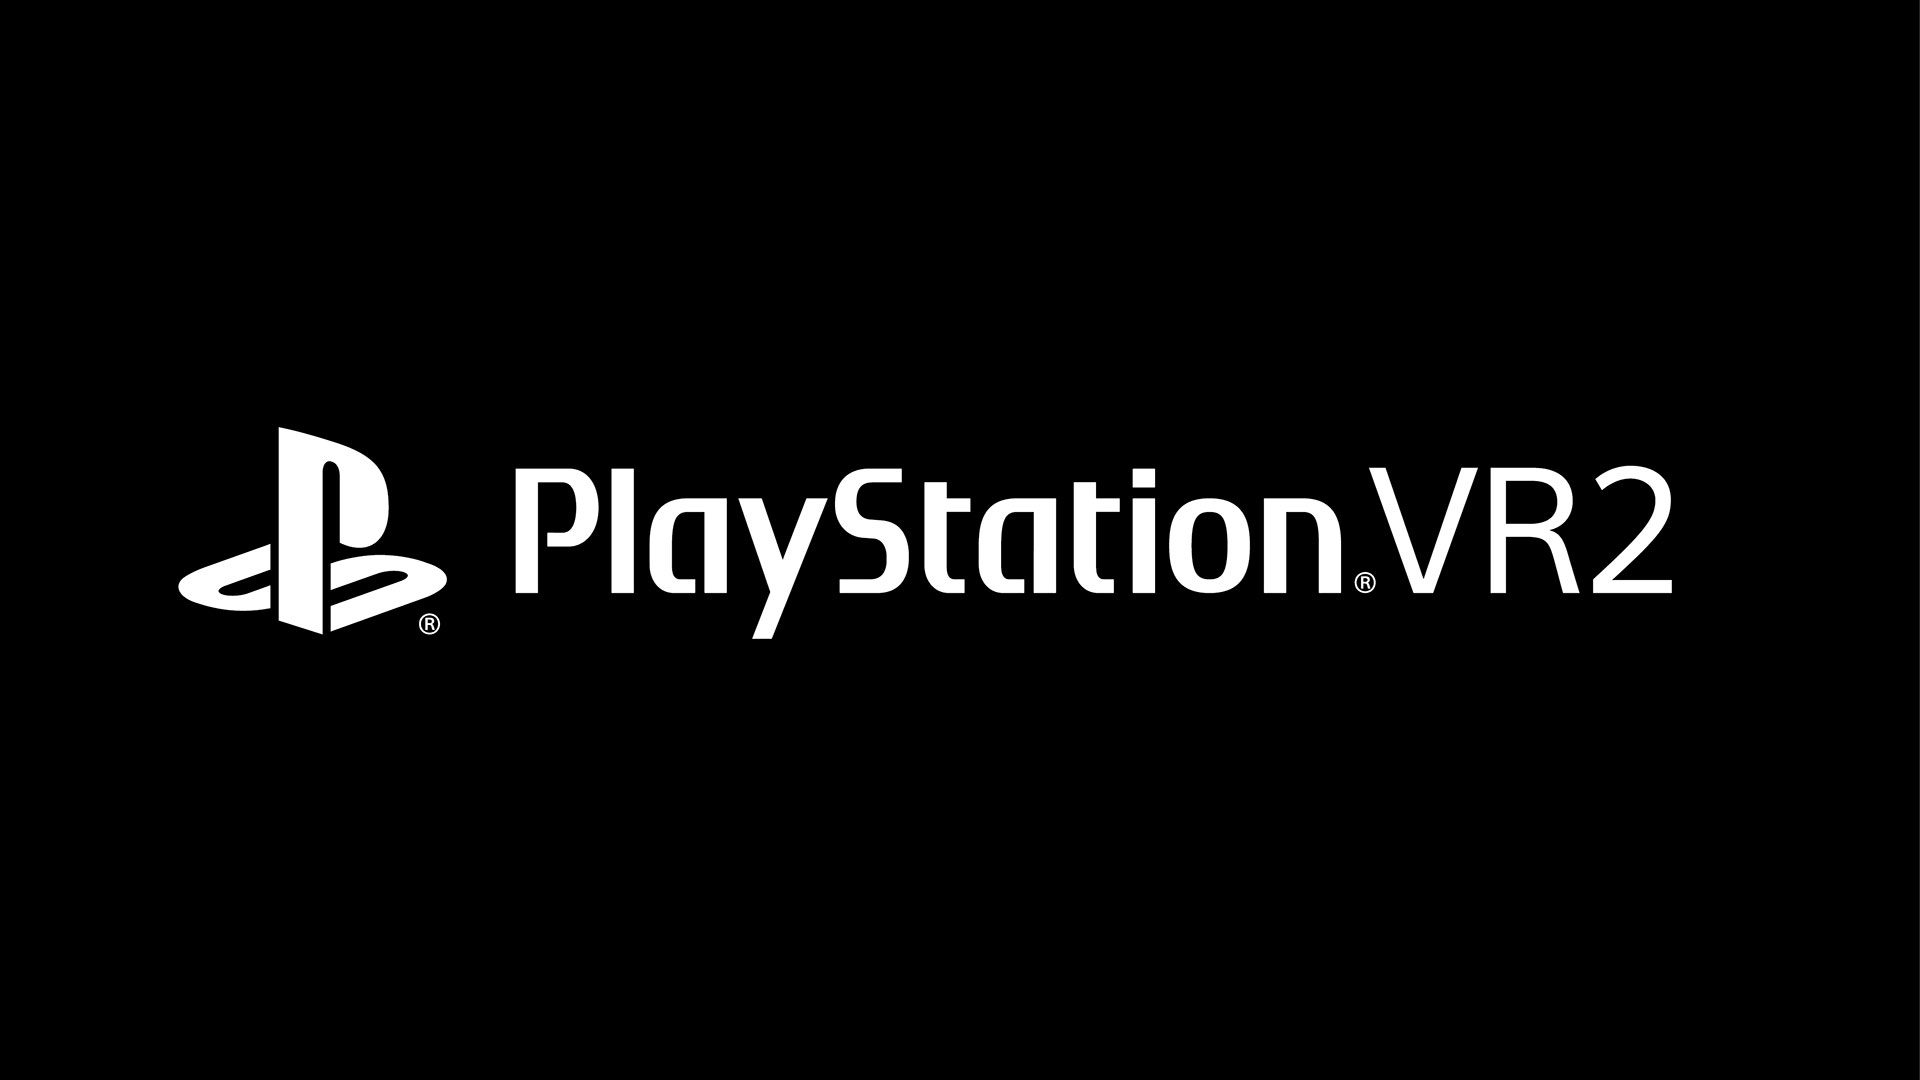 PlayStation VR2 And PlayStation VR2 Sense Controller: The Next Generation Of VR Gaming On PS5 thumbnail